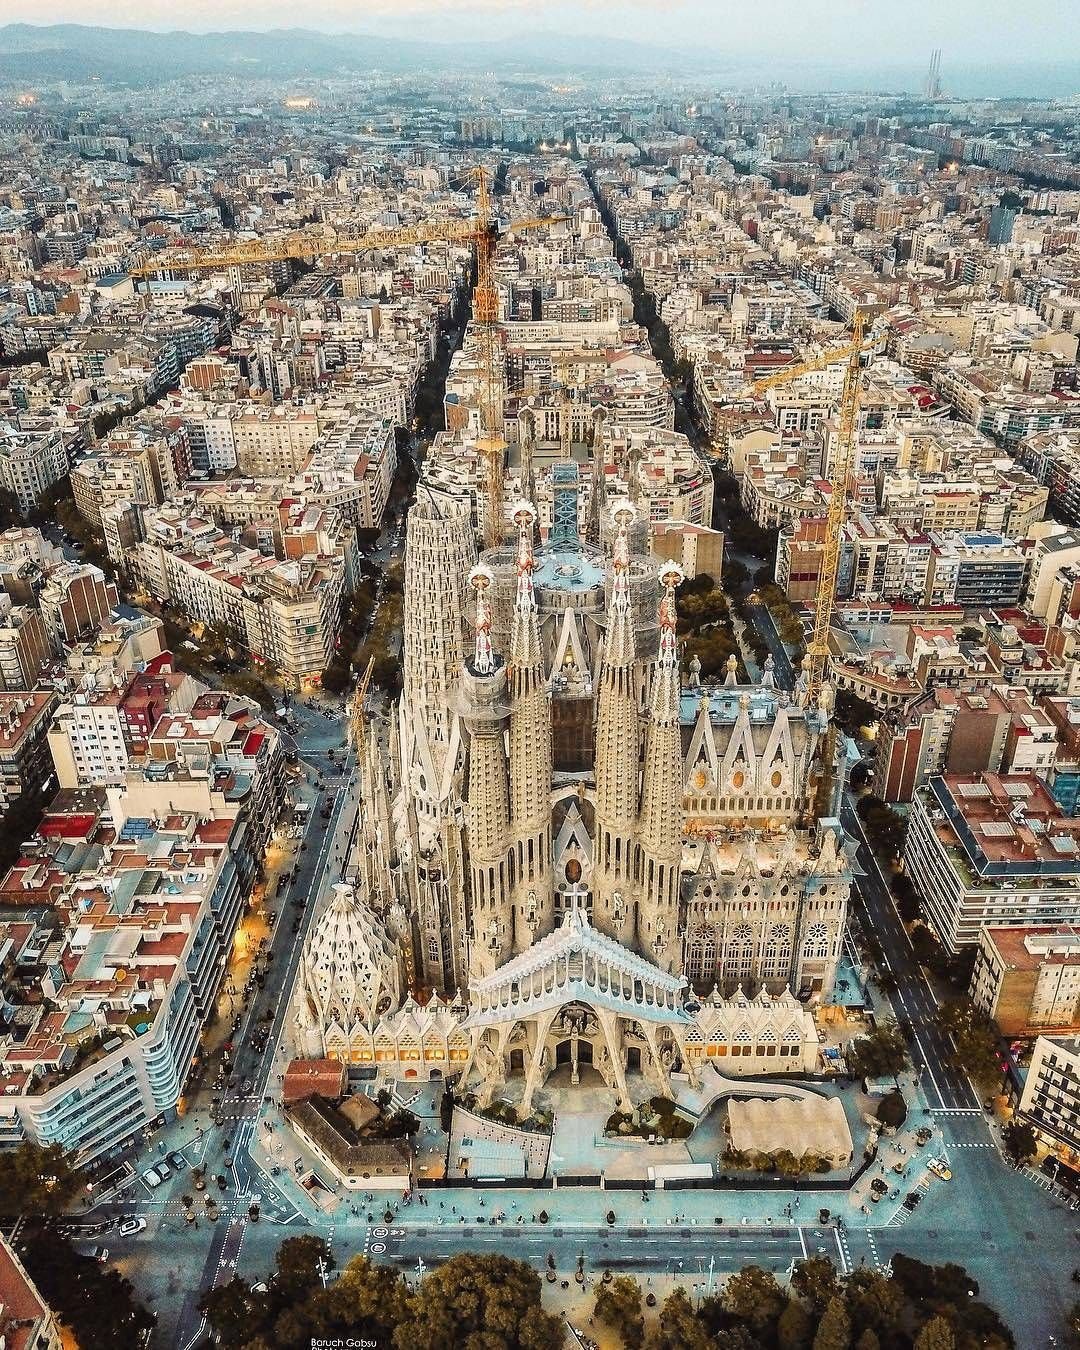 Barcelona spain. Барселона (город в Испании). Барселона город в Испании достопримечательности. Барселона (город в Испании) население. Барселона панорама.